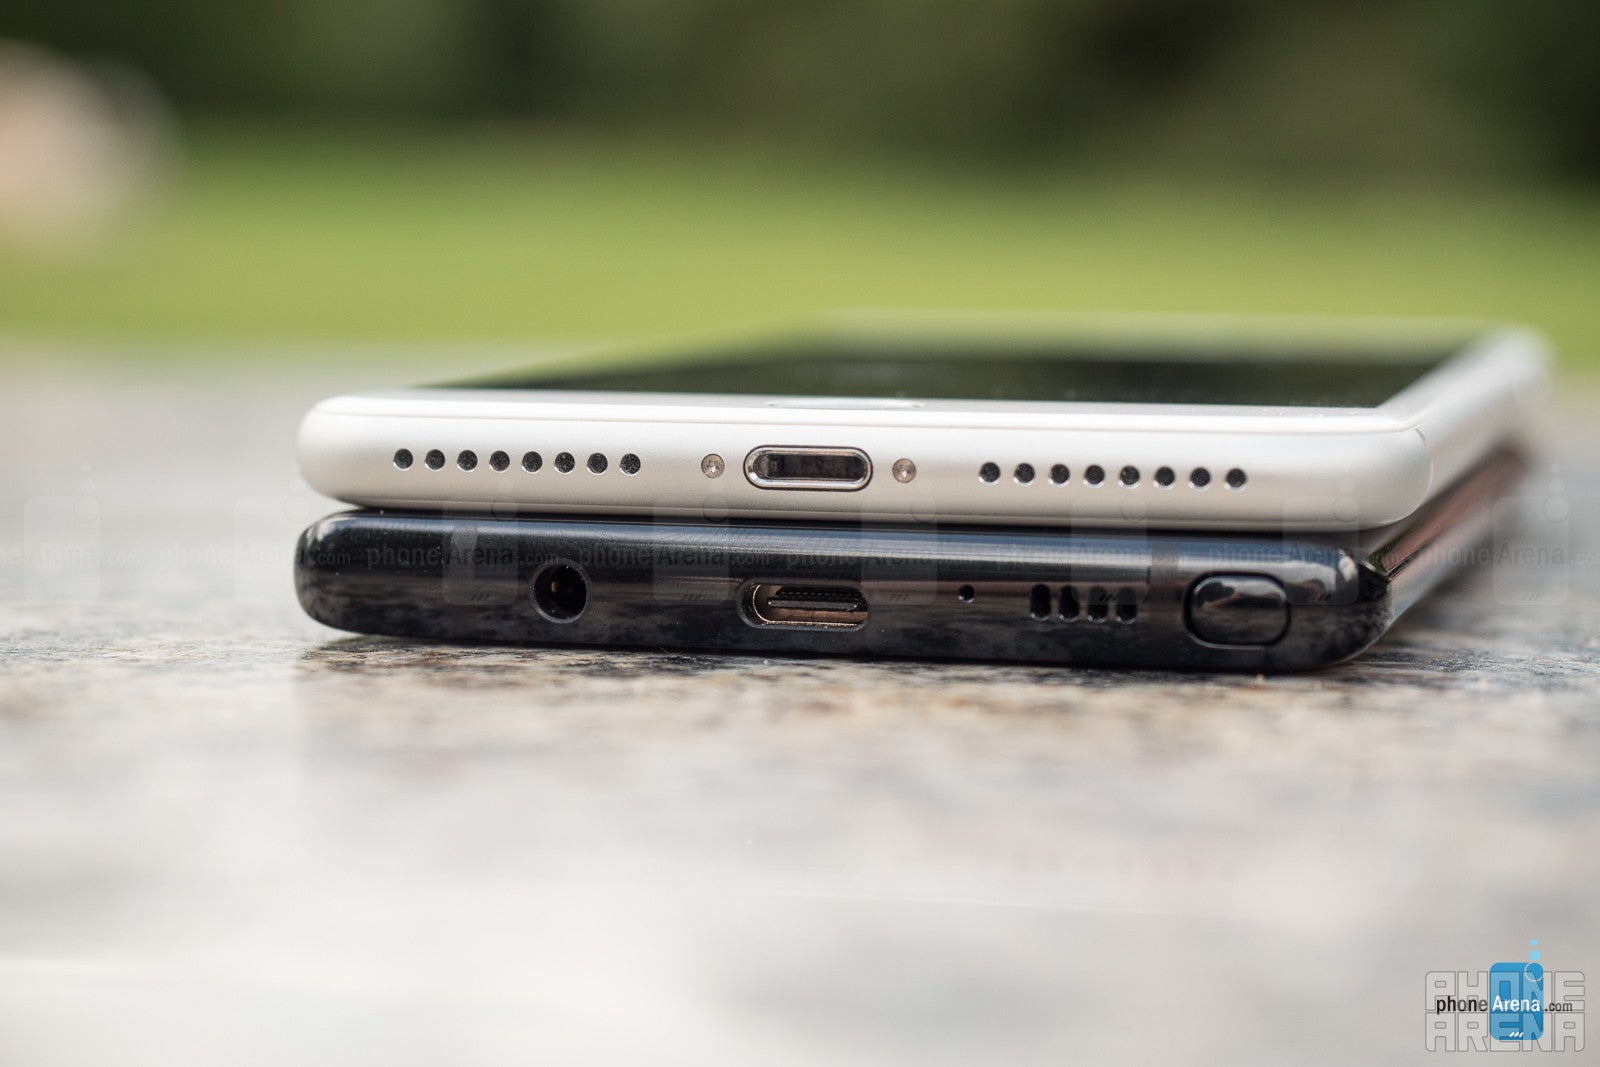 Samsung Galaxy Note 8 vs Apple iPhone 7 Plus